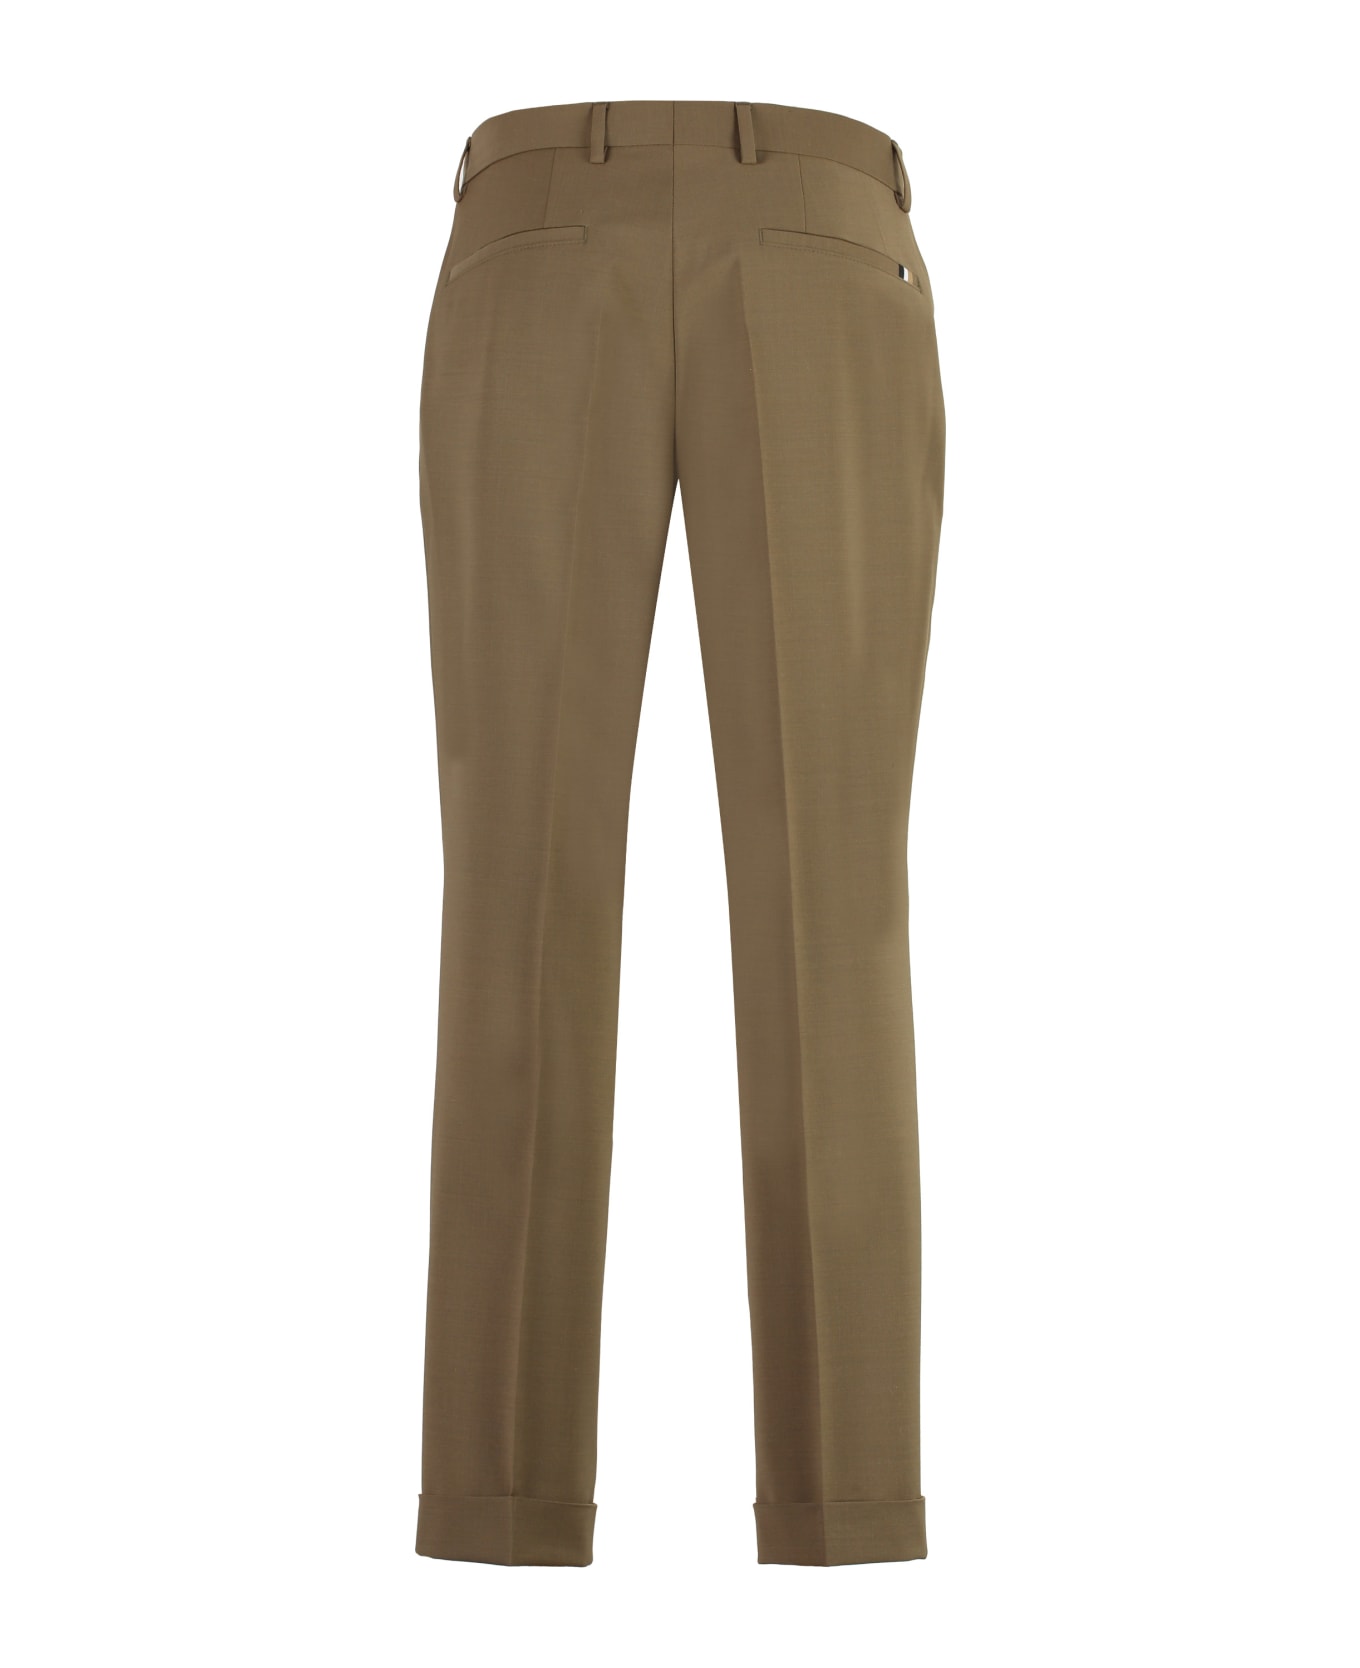 Hugo Boss Slim Fit Chino Trousers - brown